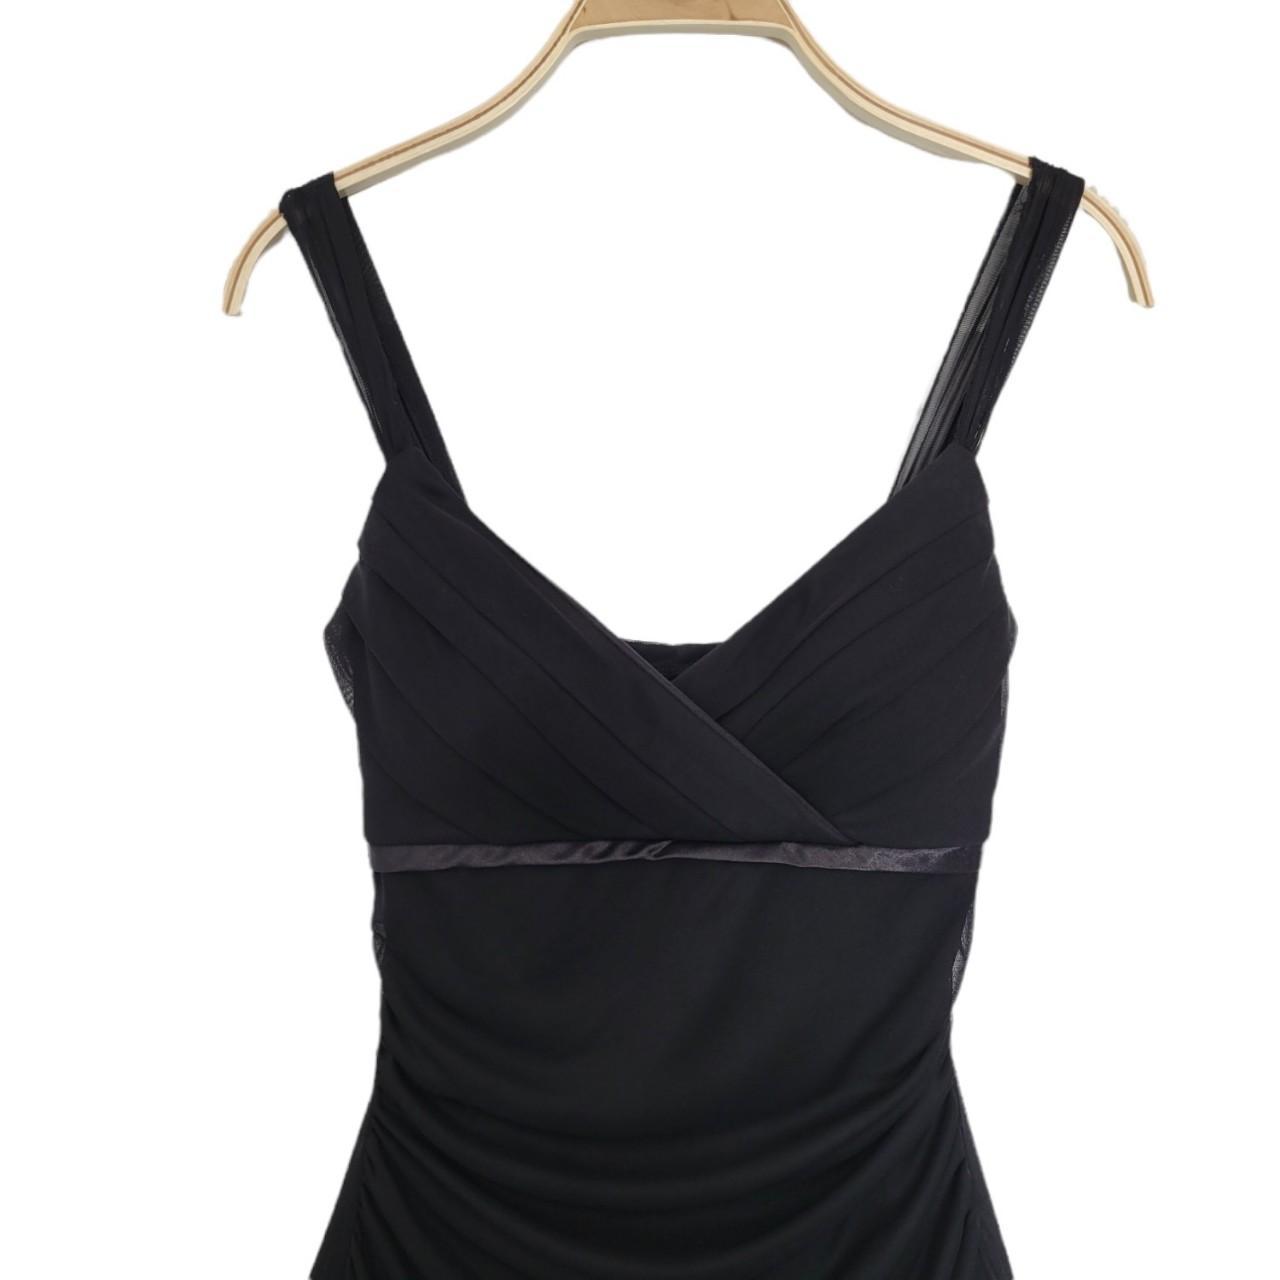 Ruby Rox Women's Black Dress (3)